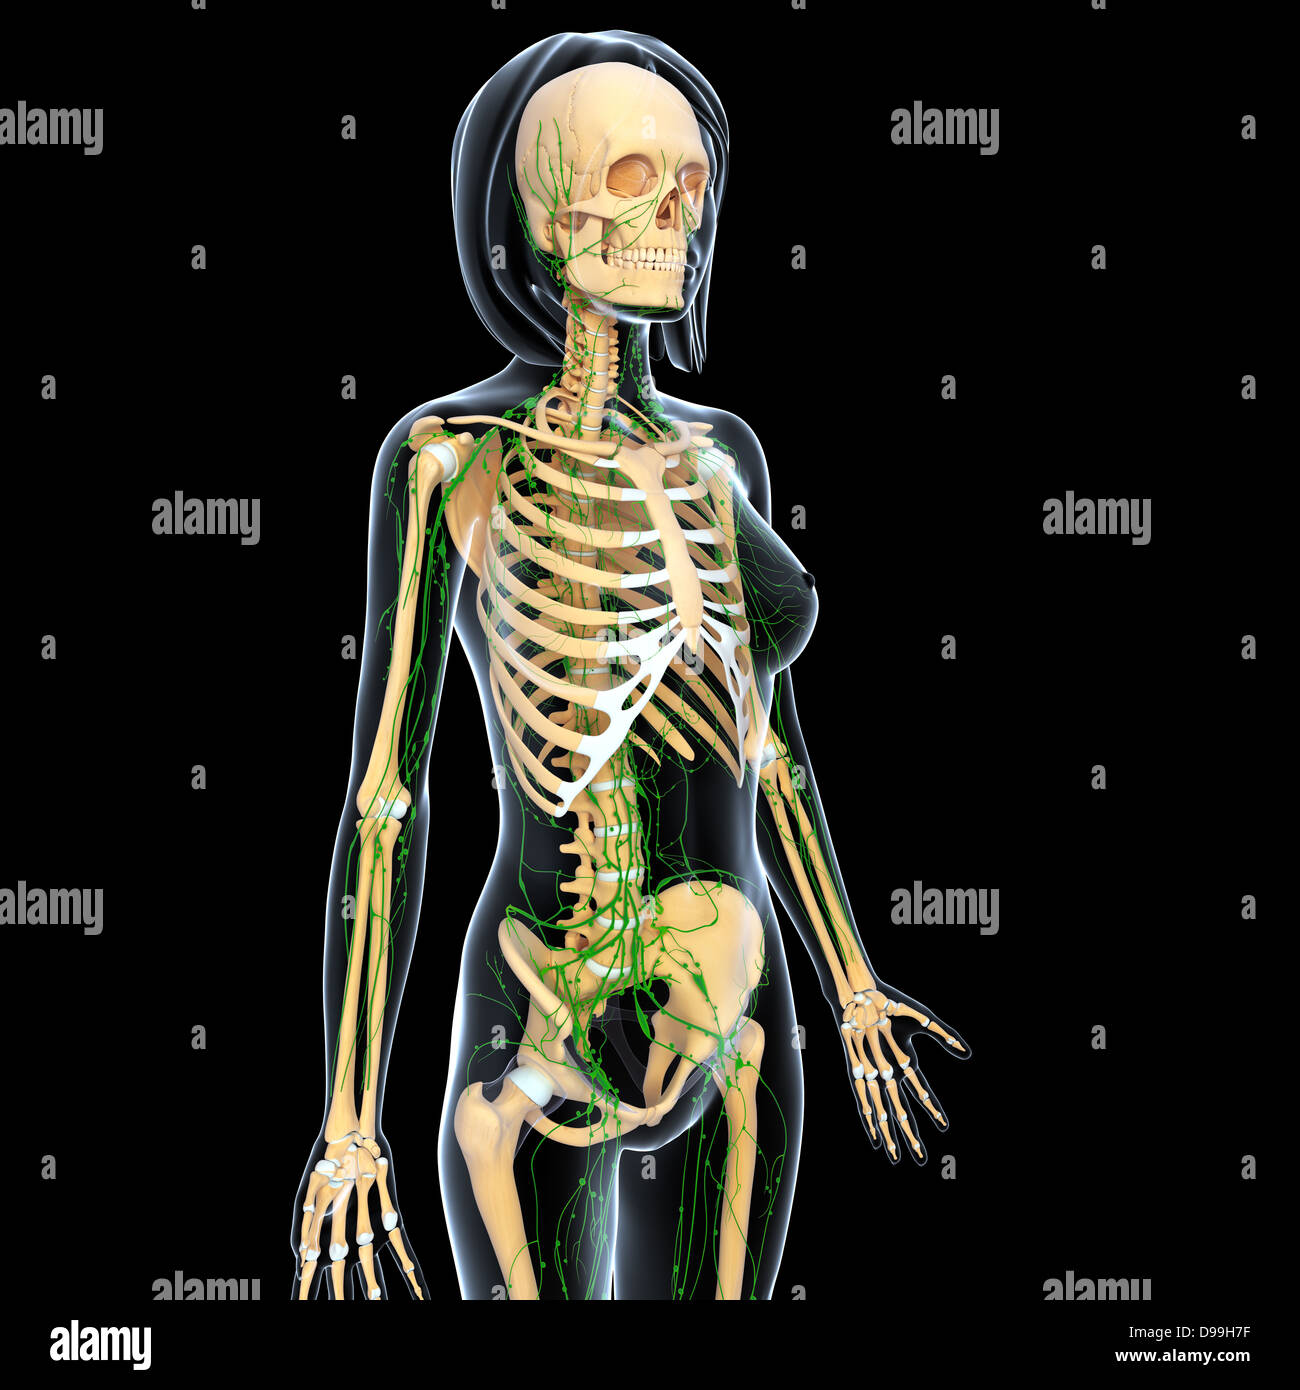 lymphatic system of female body anatomy Stock Photo